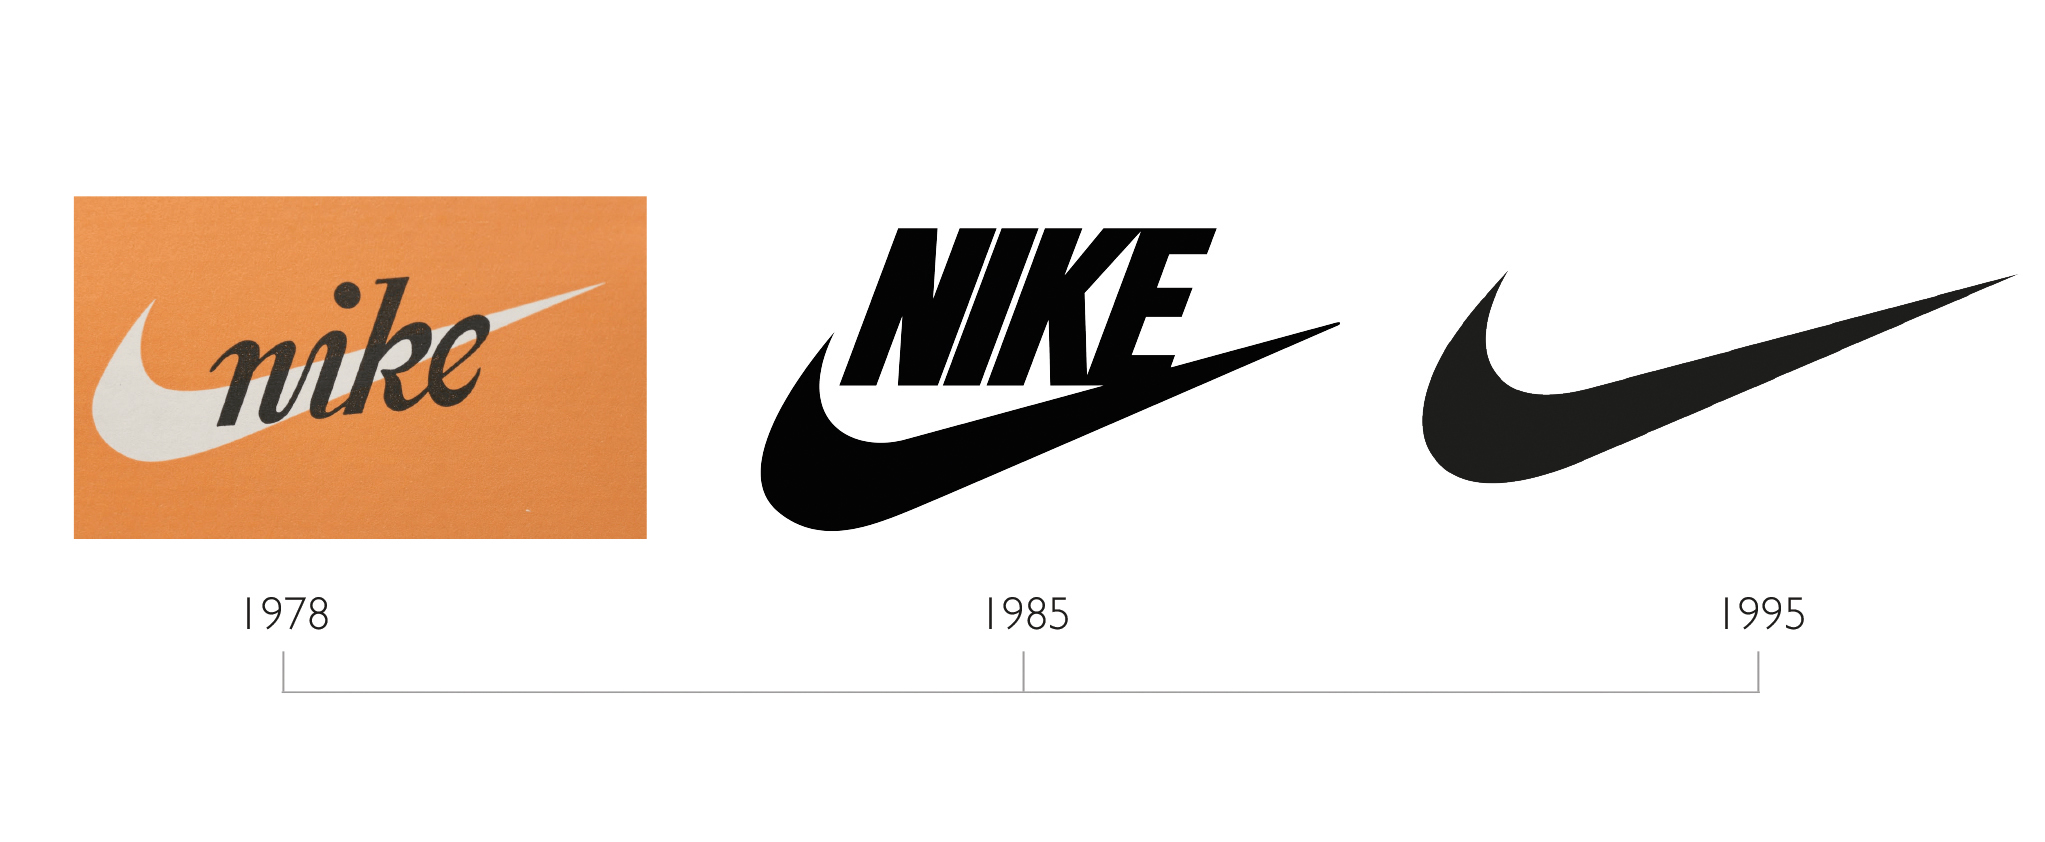 Evolution of Nike logo designs